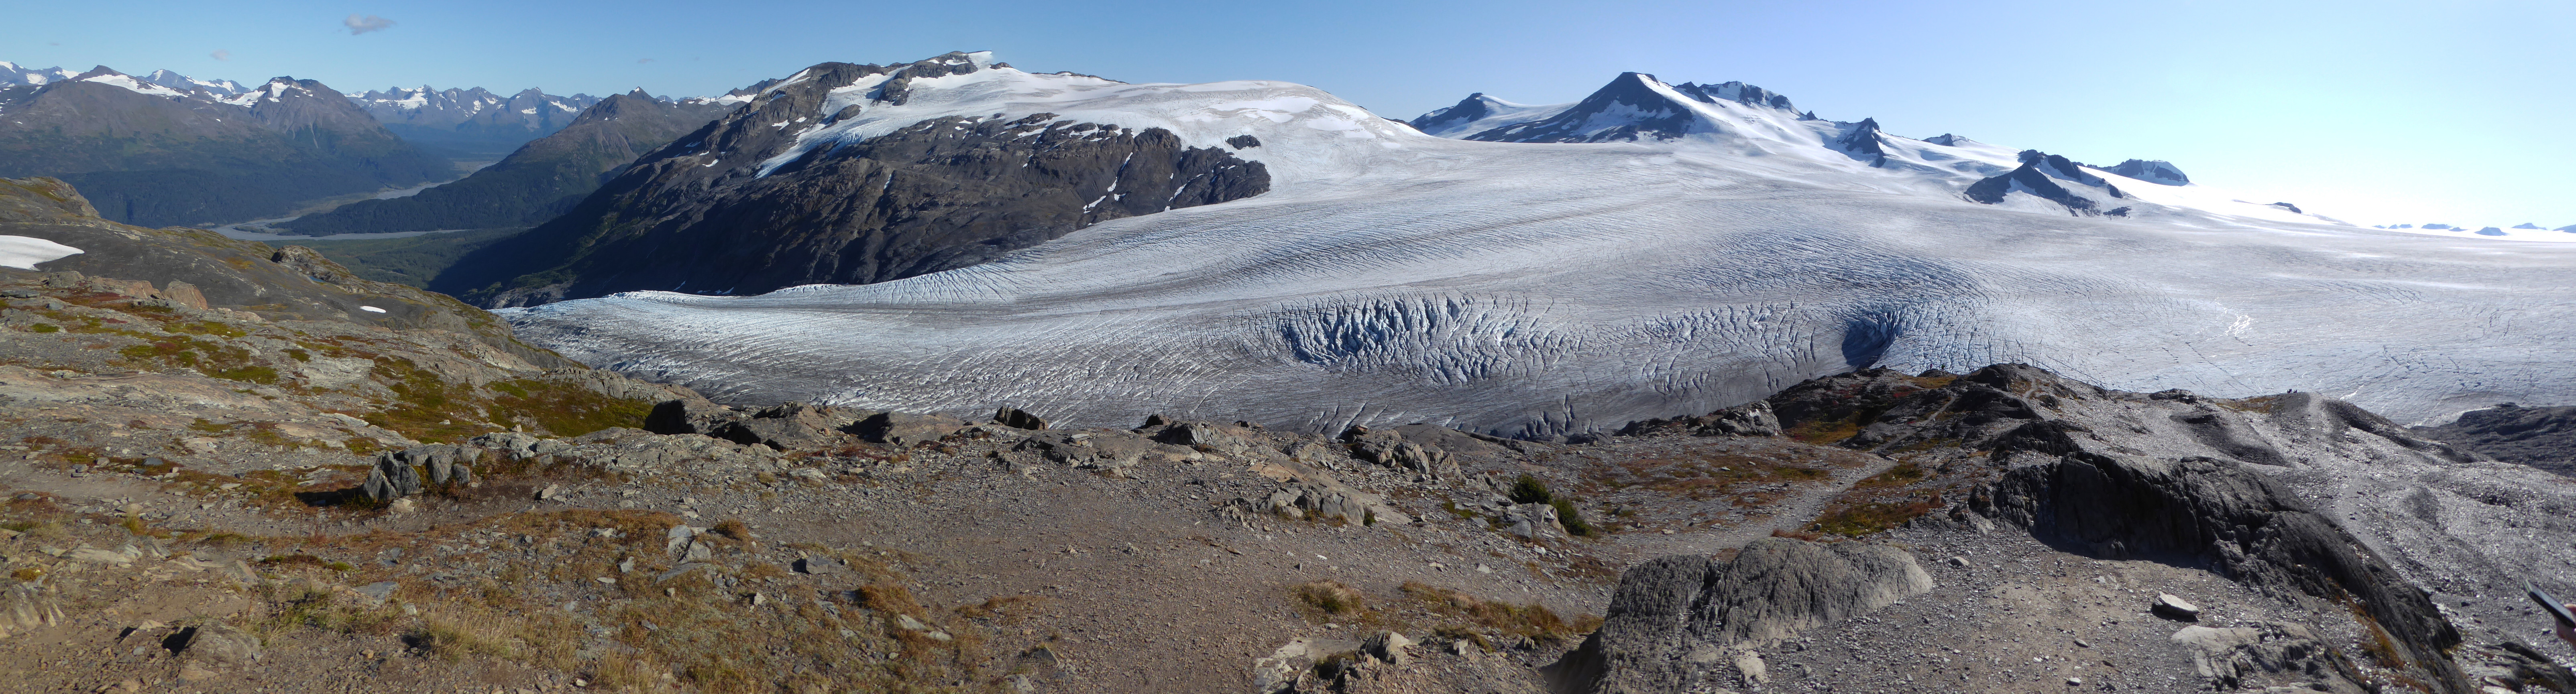 Alaska: A Land of Glaciers and Icefields - Kenai Fjords National Park